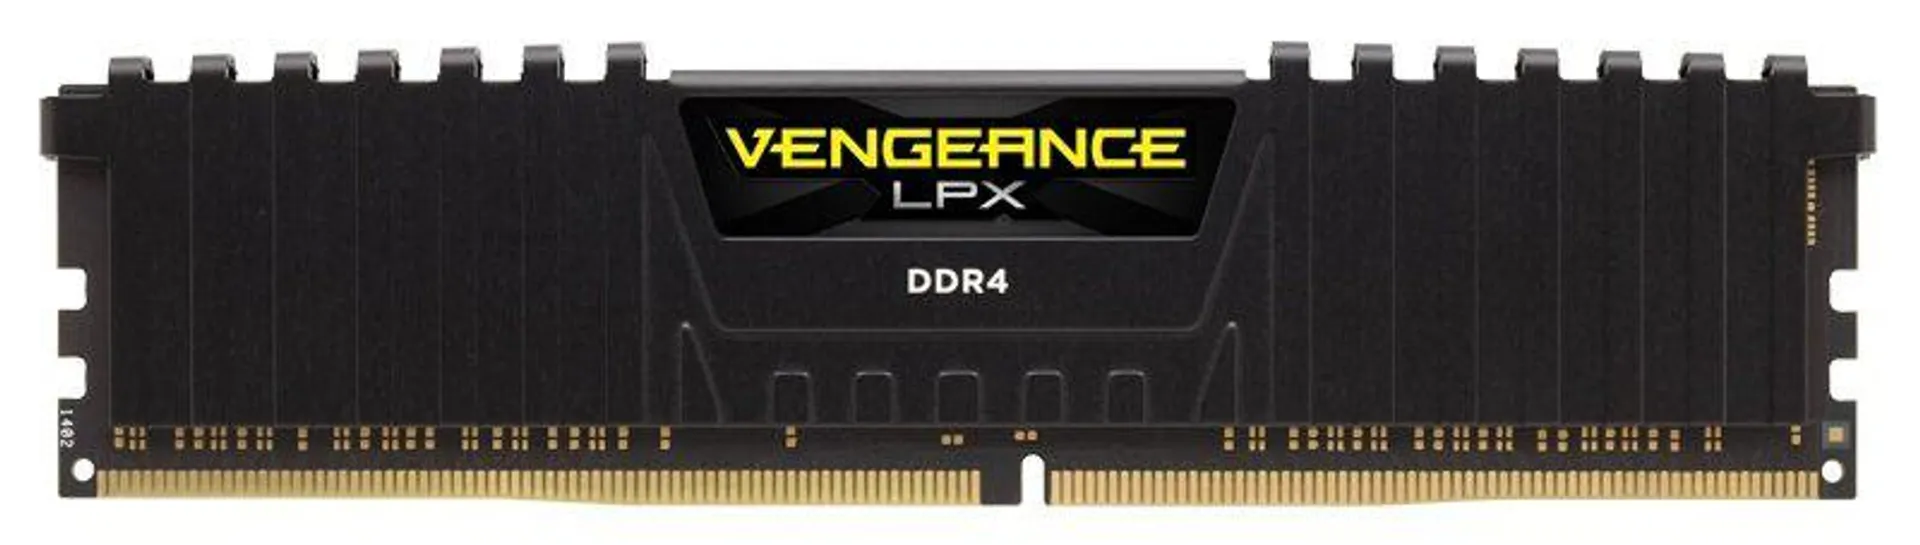 Corsair Vengeance LPX 8GB (1x8GB) DDR4 DRAM 2666MHz C16 Memory Kit - Black 1.2V